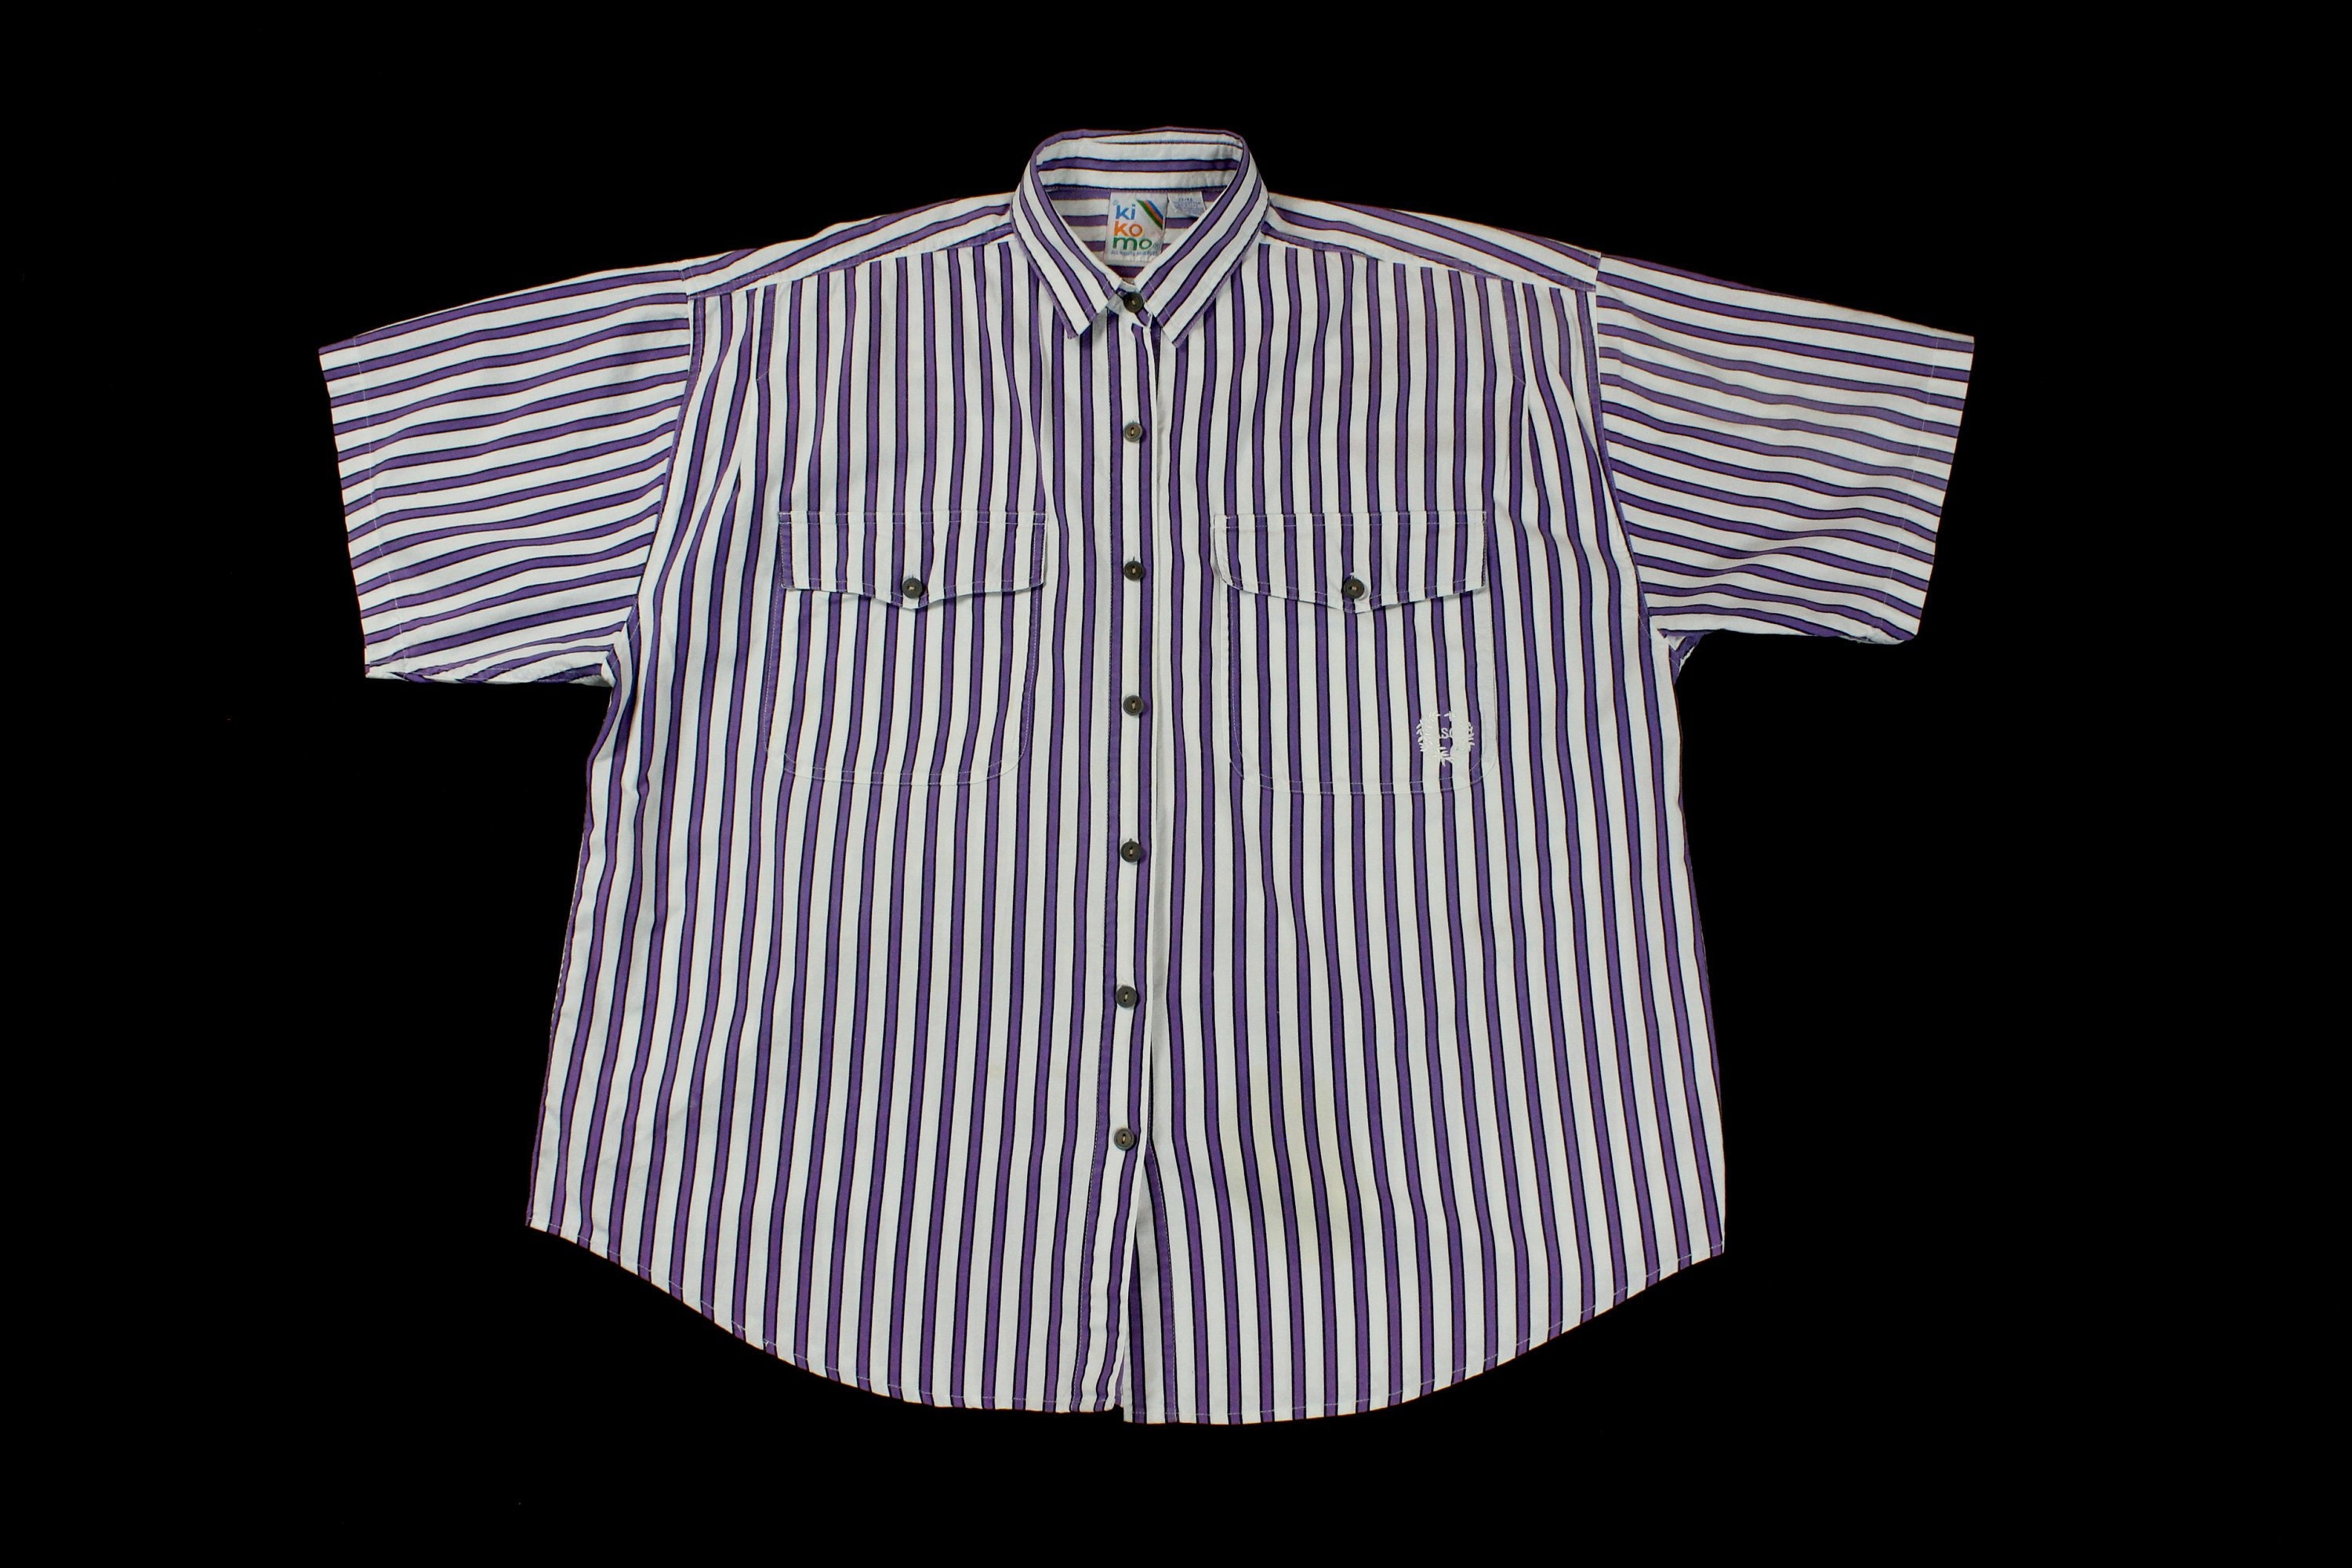 Vintage Stripe Button Up Shirt